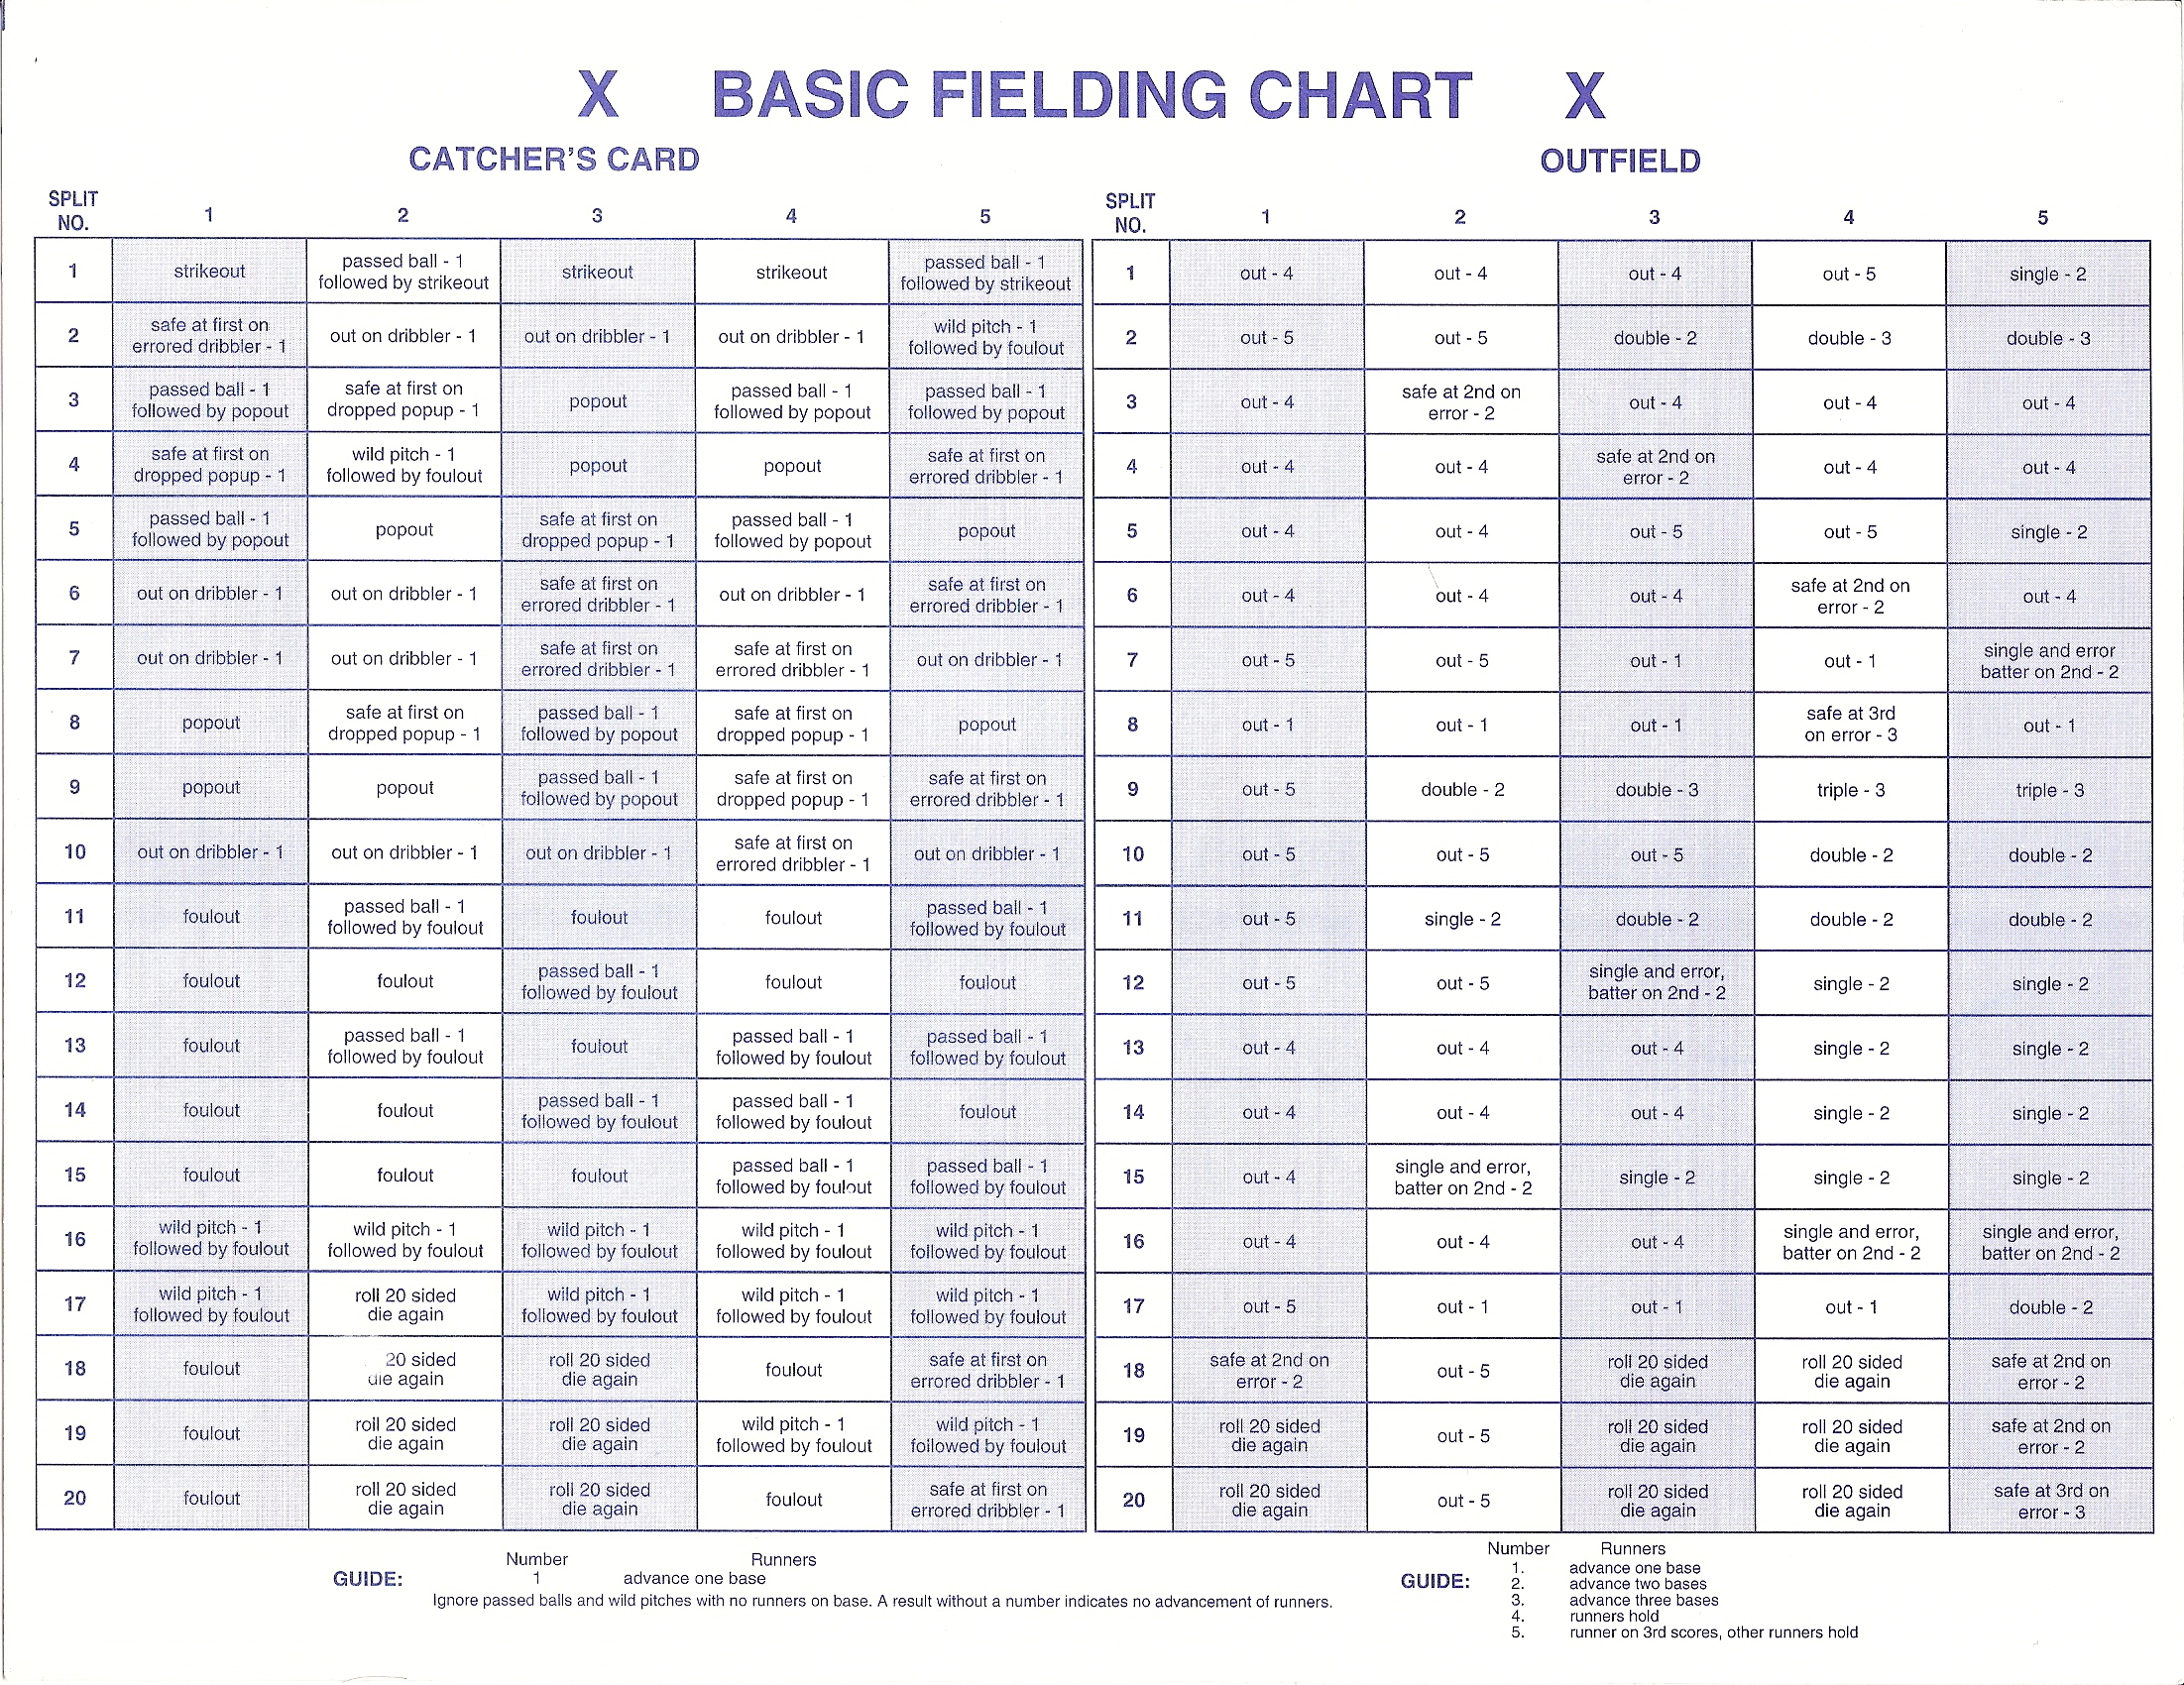 Strat O Matic Basic Fielding Chart